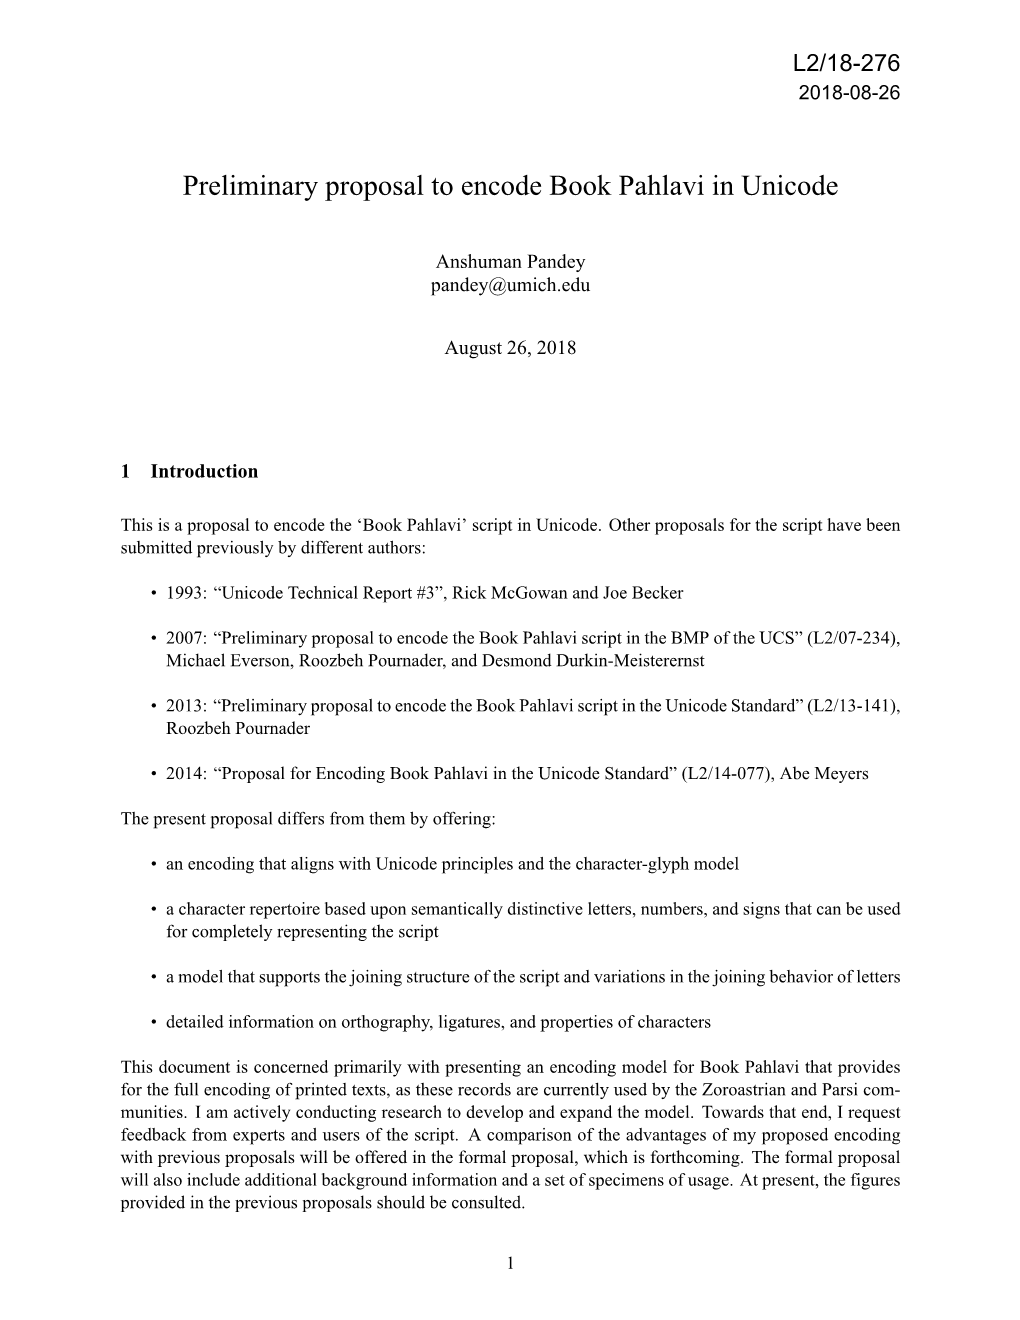 Preliminary Proposal to Encode Book Pahlavi in Unicode